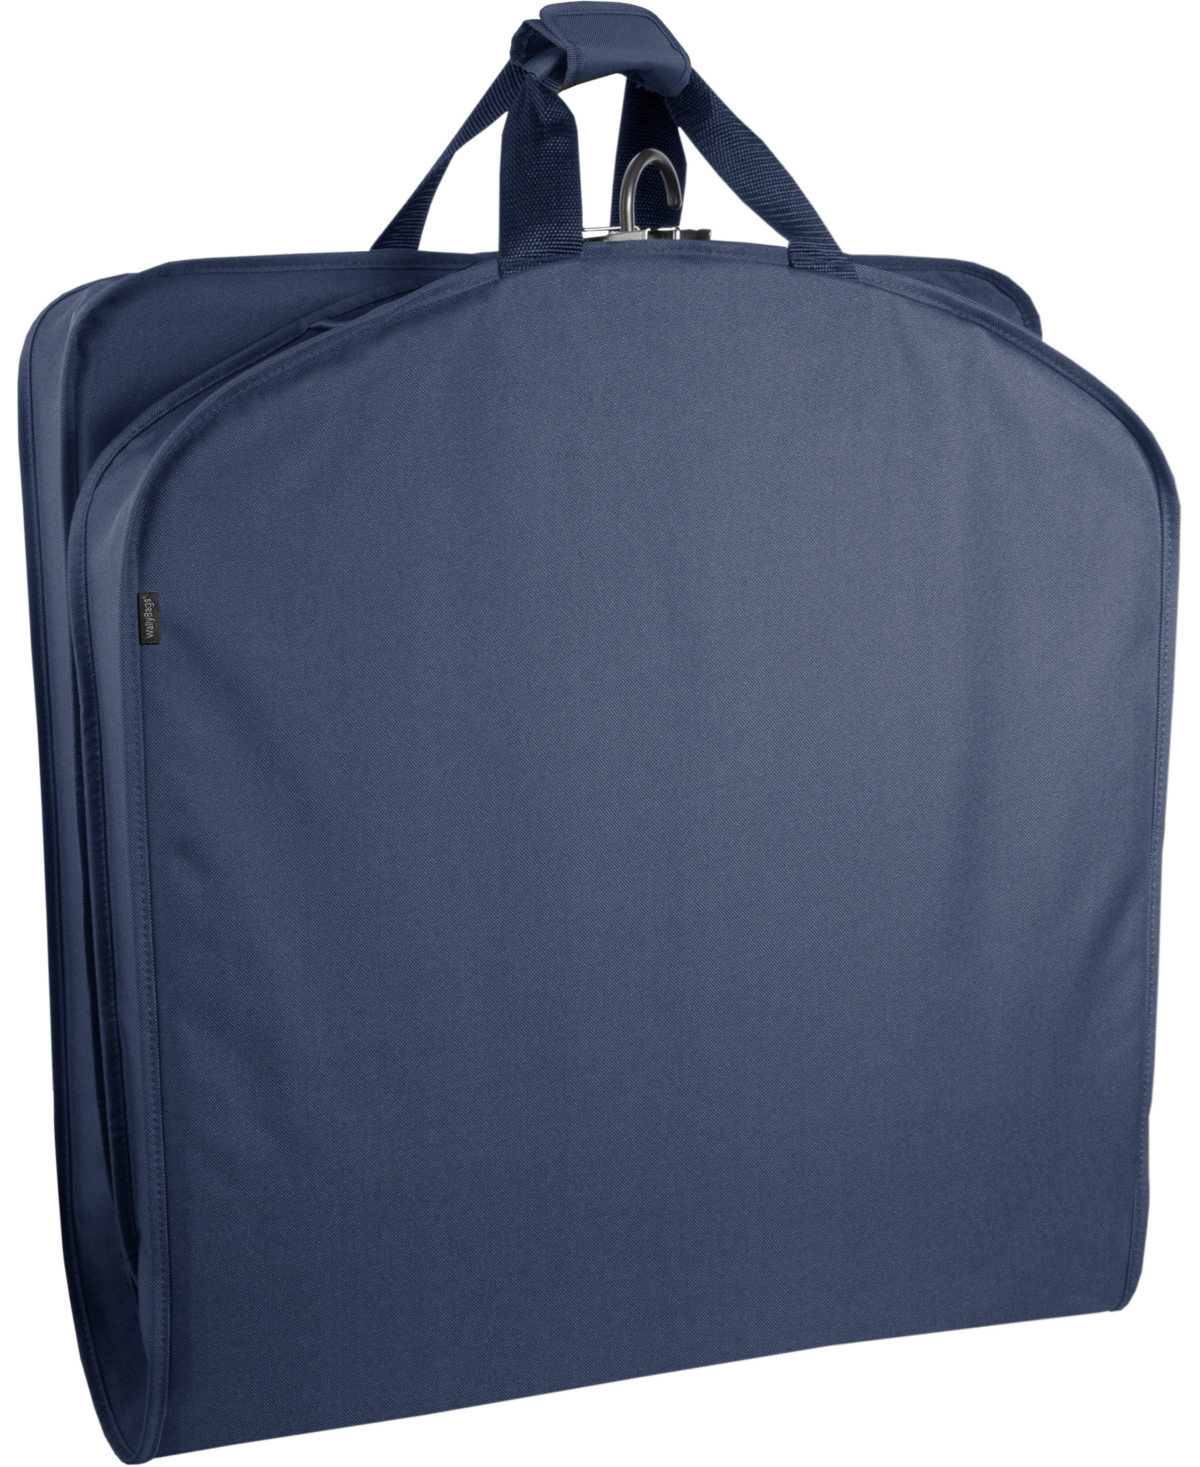 Wallybags 52" Deluxe Travel Garment Bag In Navy